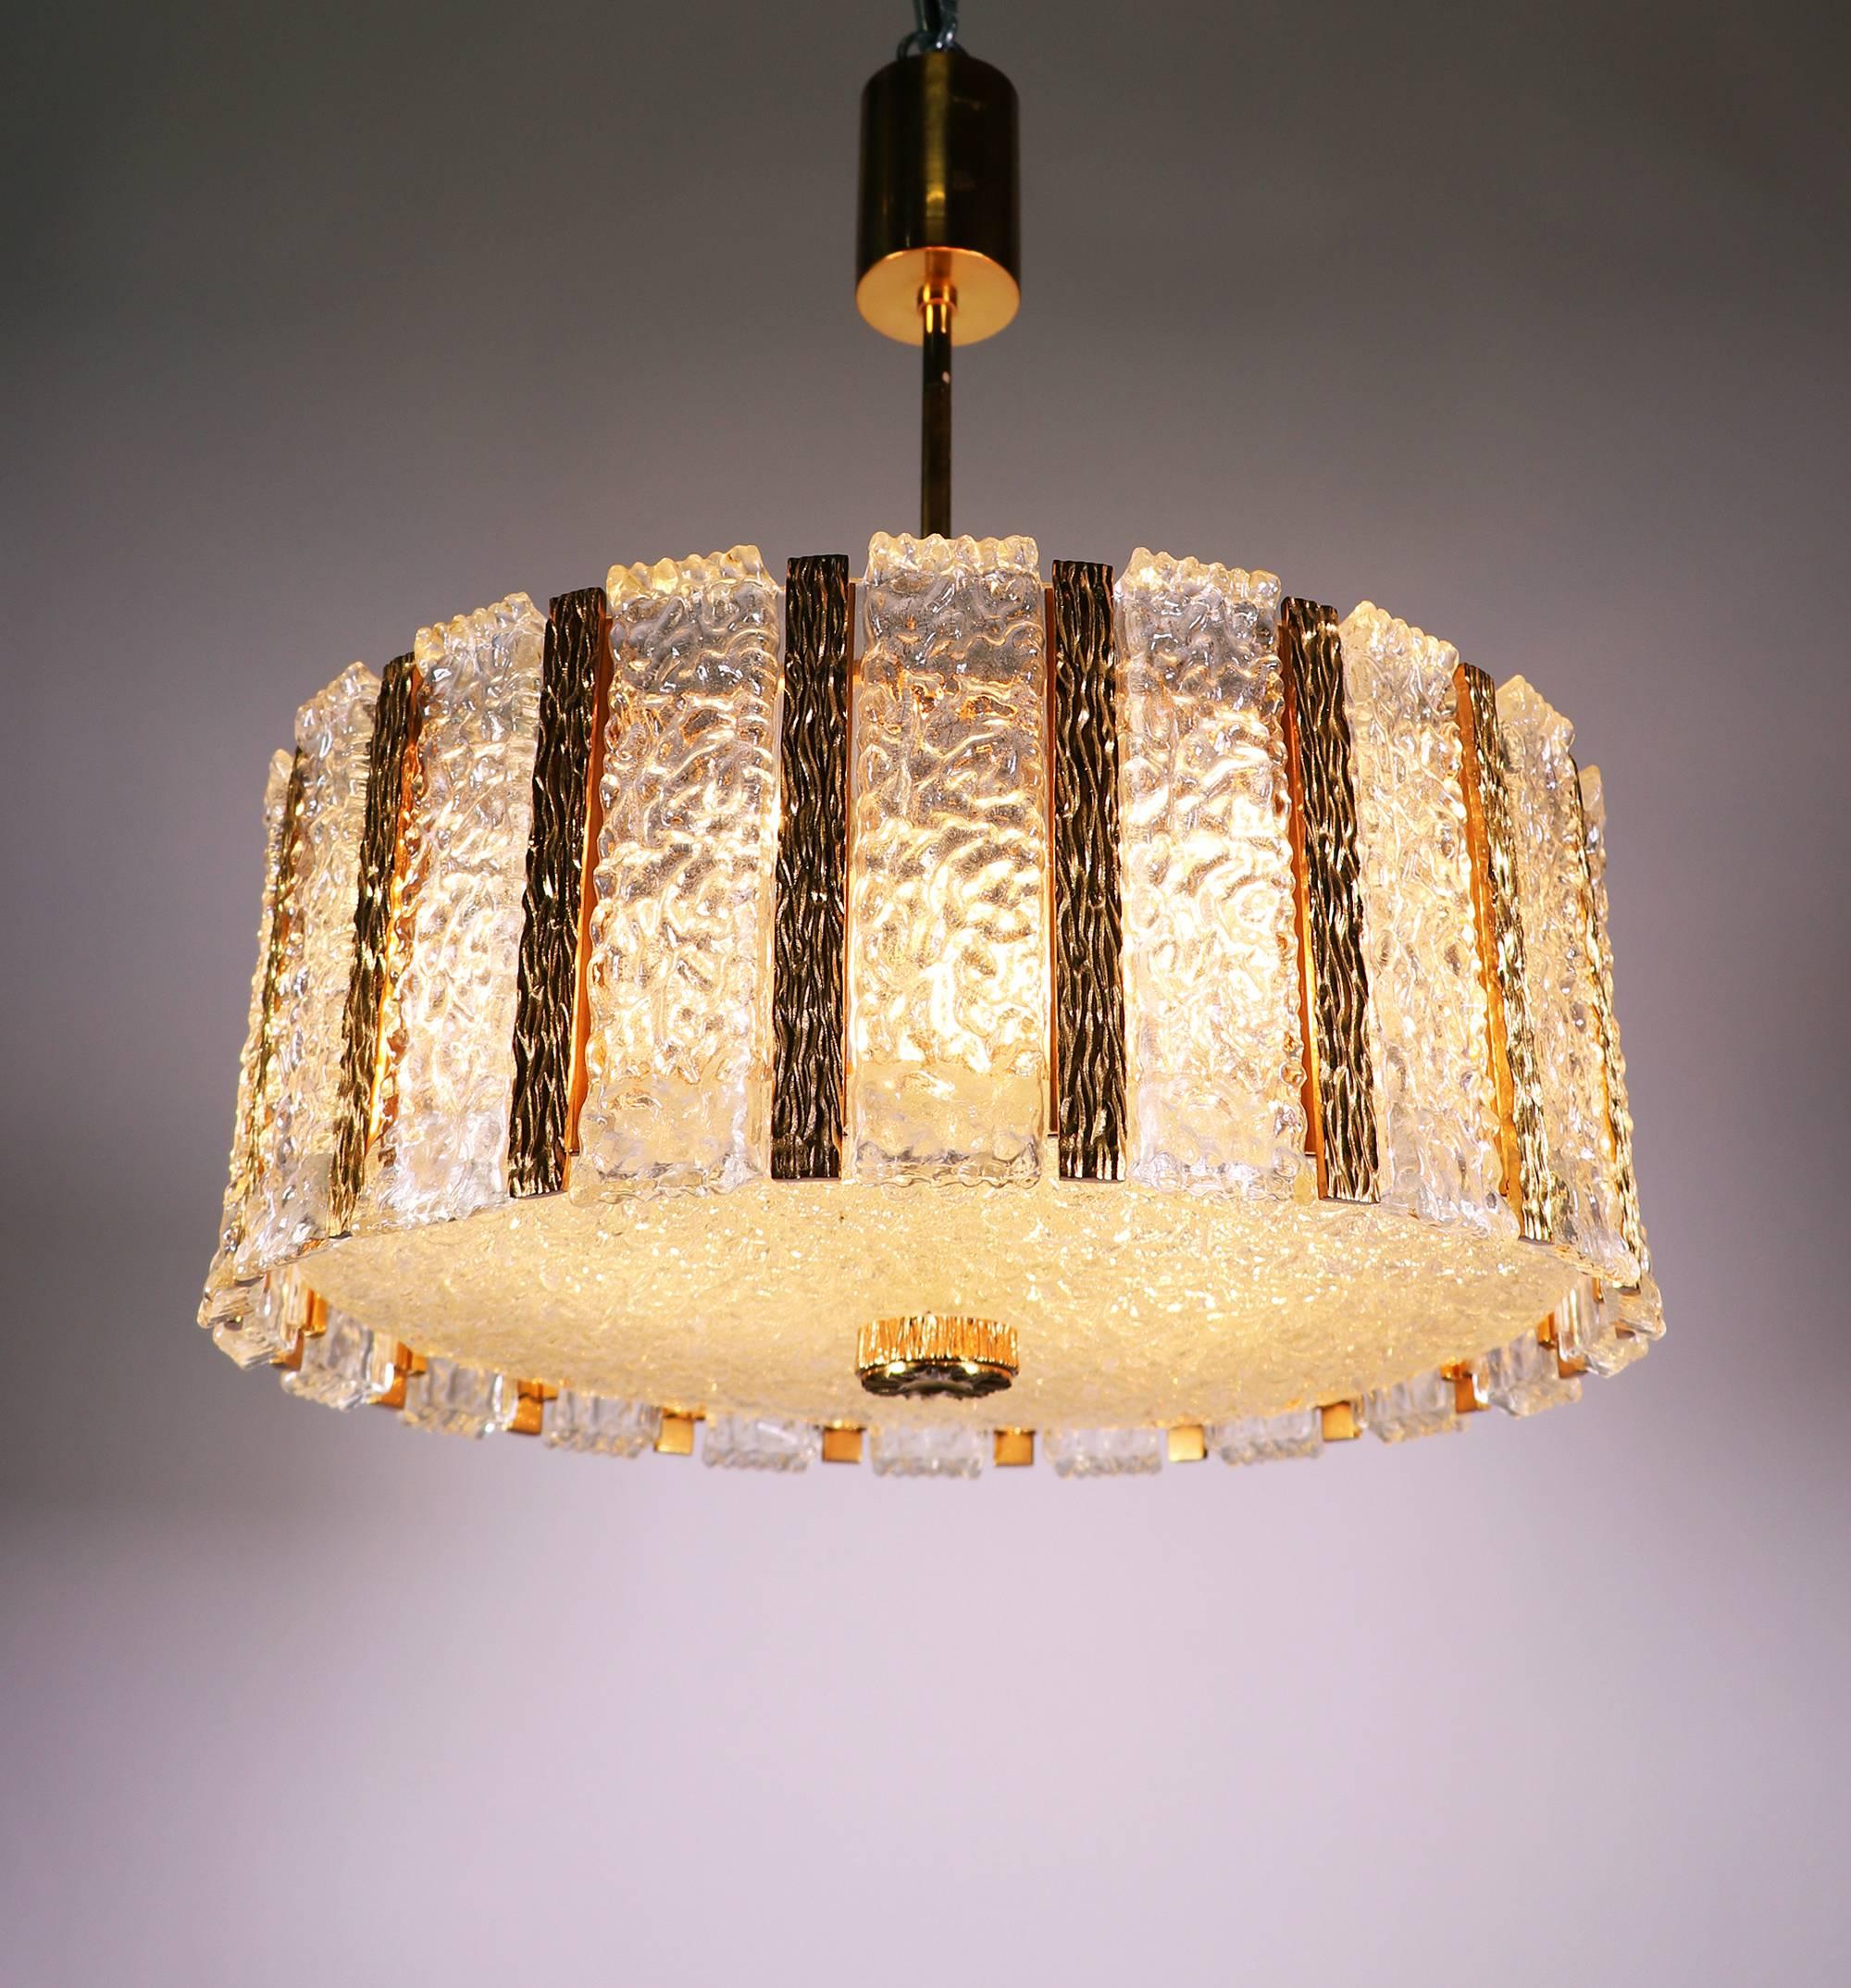 Elegant gold-plated drum chandelier with iced glass panels on a gilt-bronze frame. Heavy duty. Designed by Kalmar, Austria in the 1960s.

Design: Julius Theodor Kalmar. 
Measures: diameter 20